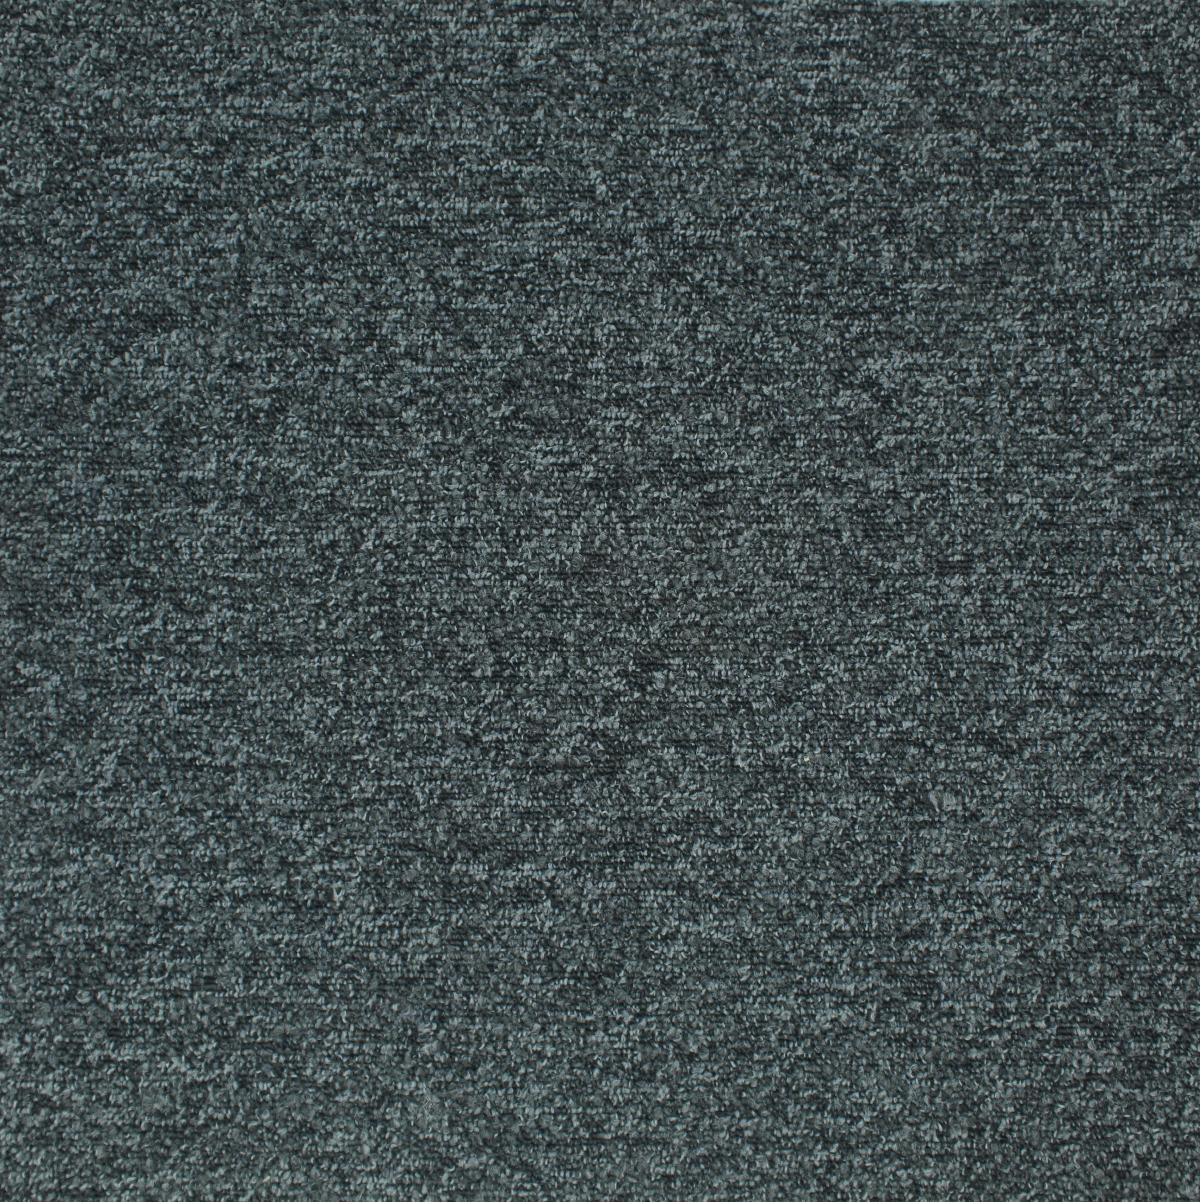 Carpet Tile Tarkett Sintelon Light-Füme-50cmx50cm-4 PCs (1m ²)